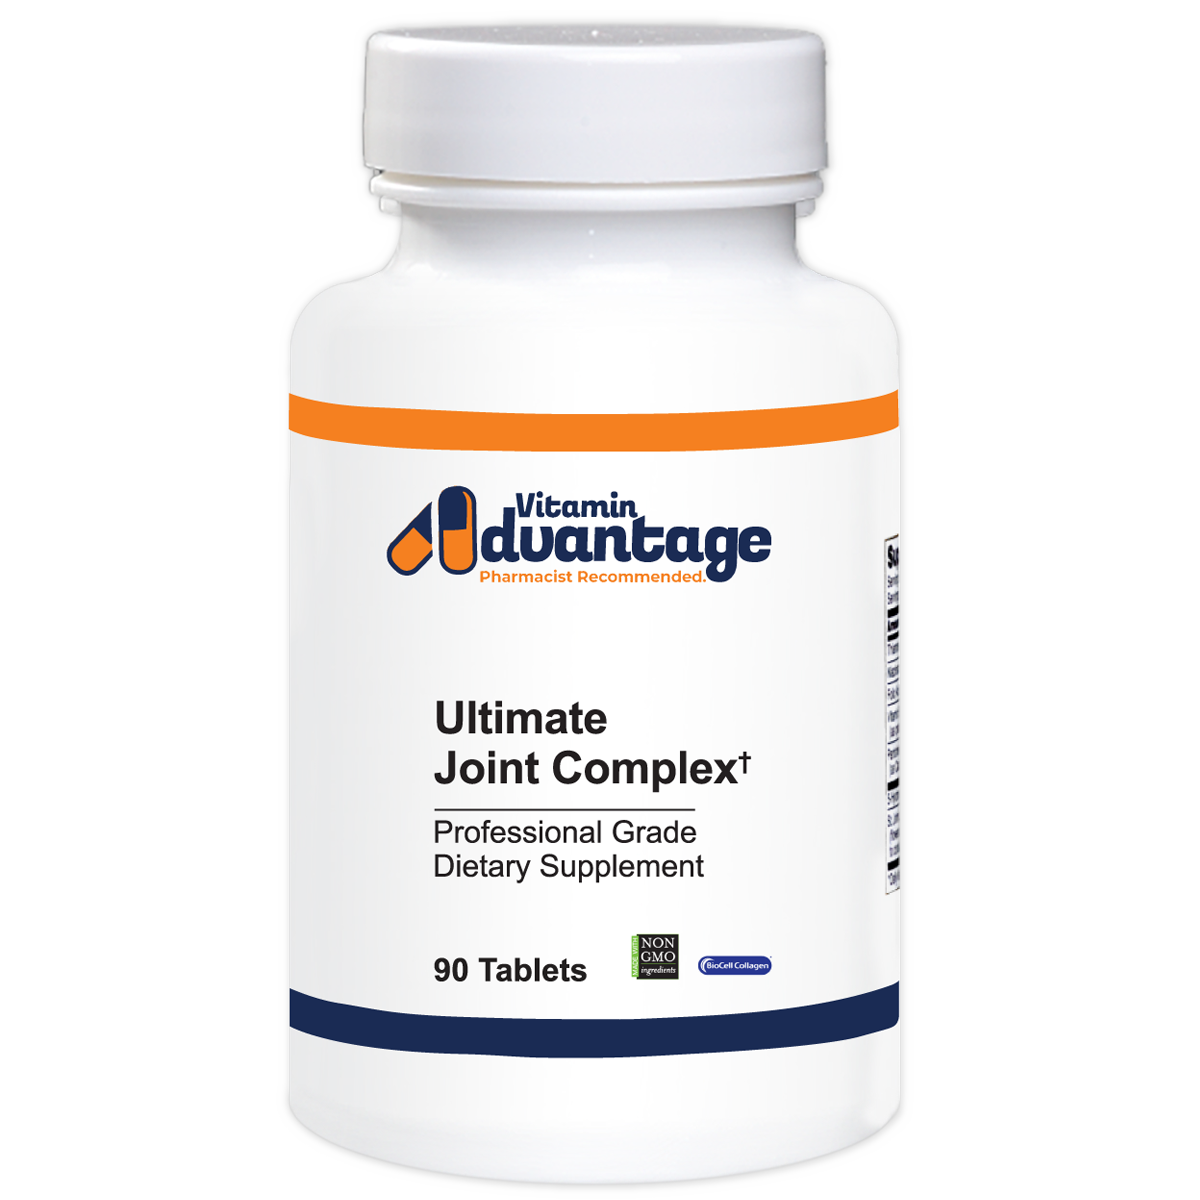 Vitamin Advantage - Ultimate Joint Complex